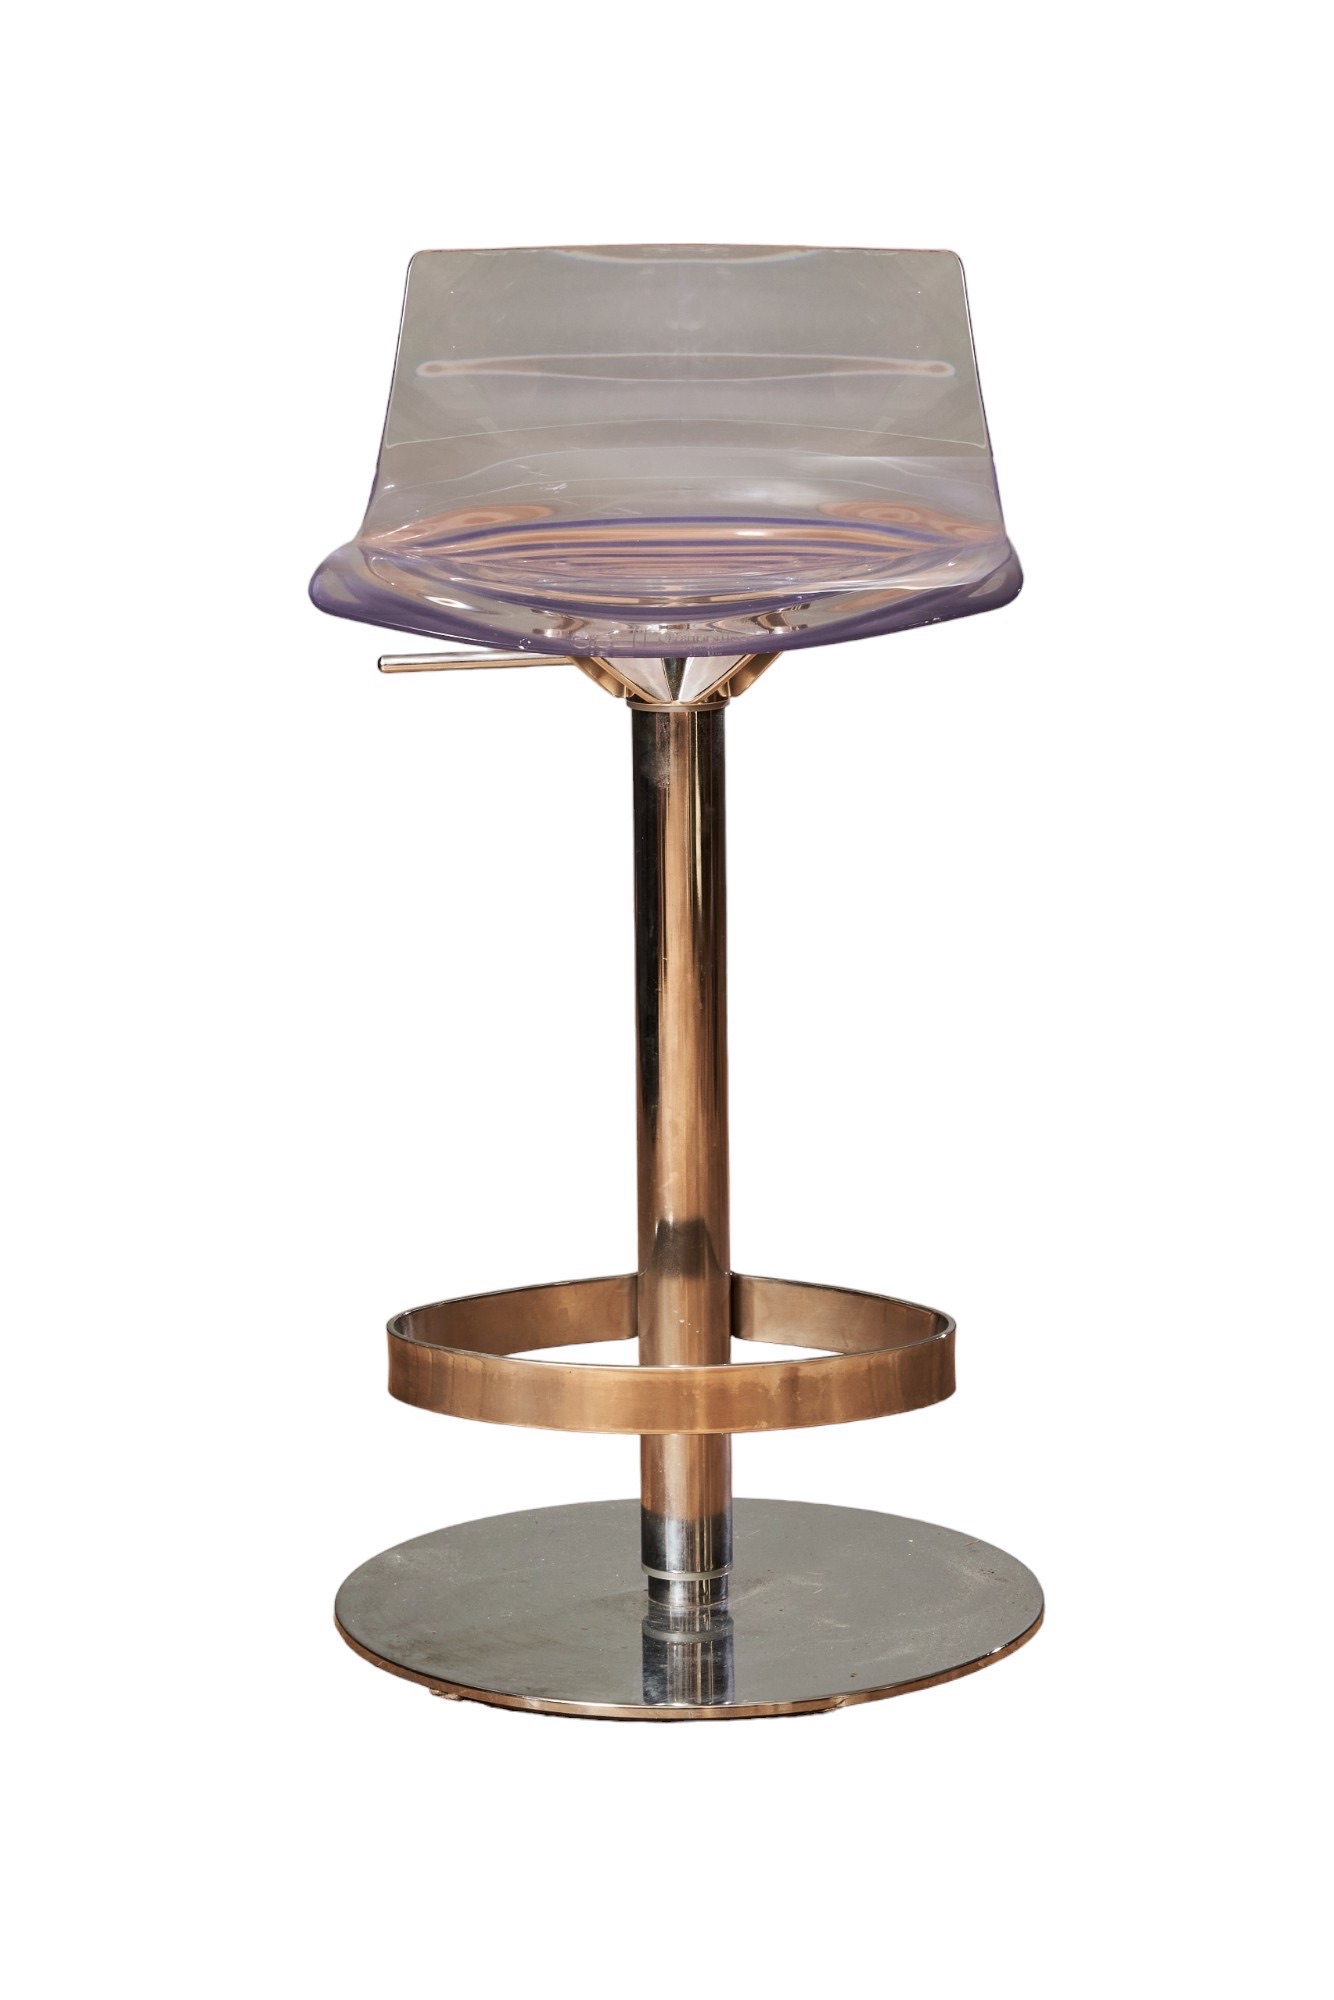 Calligaris, Four LíEau bar stools - Image 2 of 3